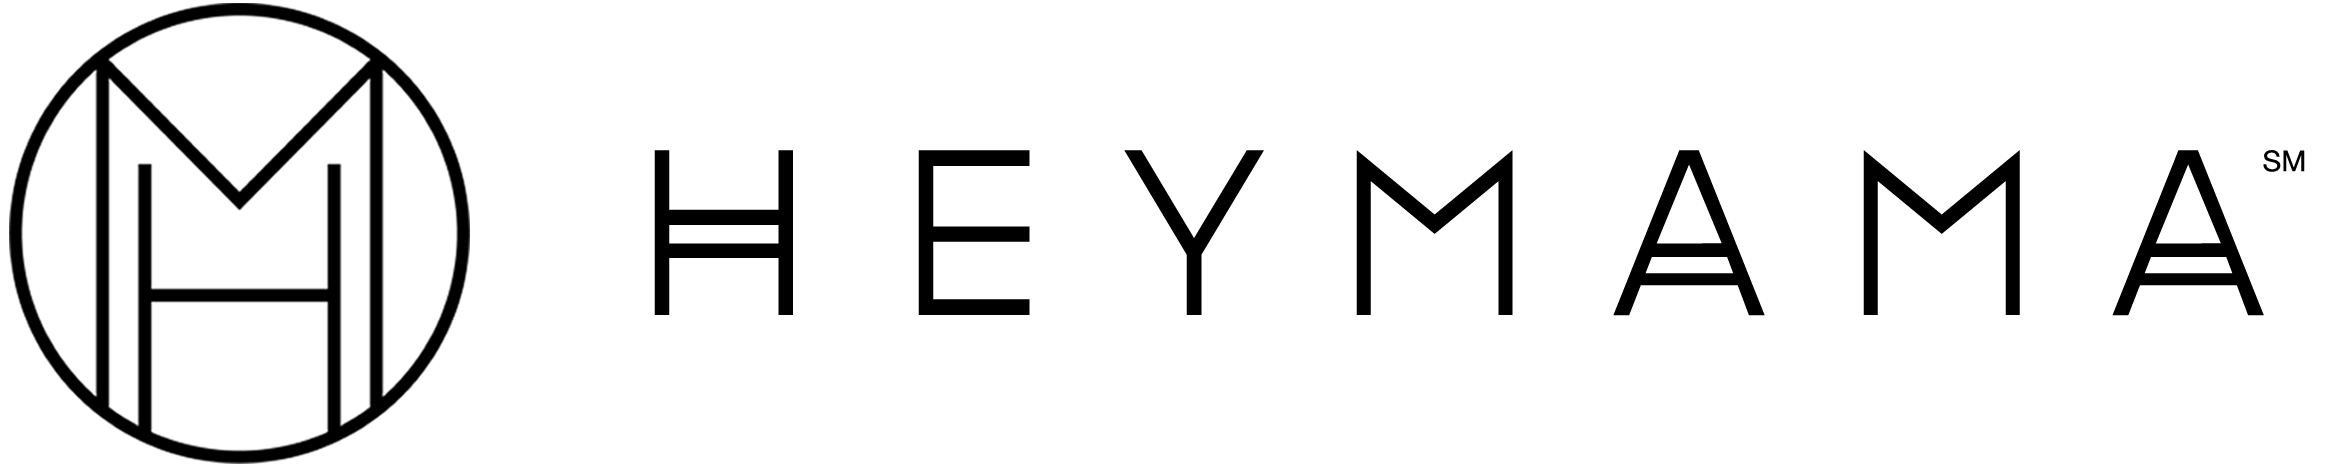 heymama-logo.png